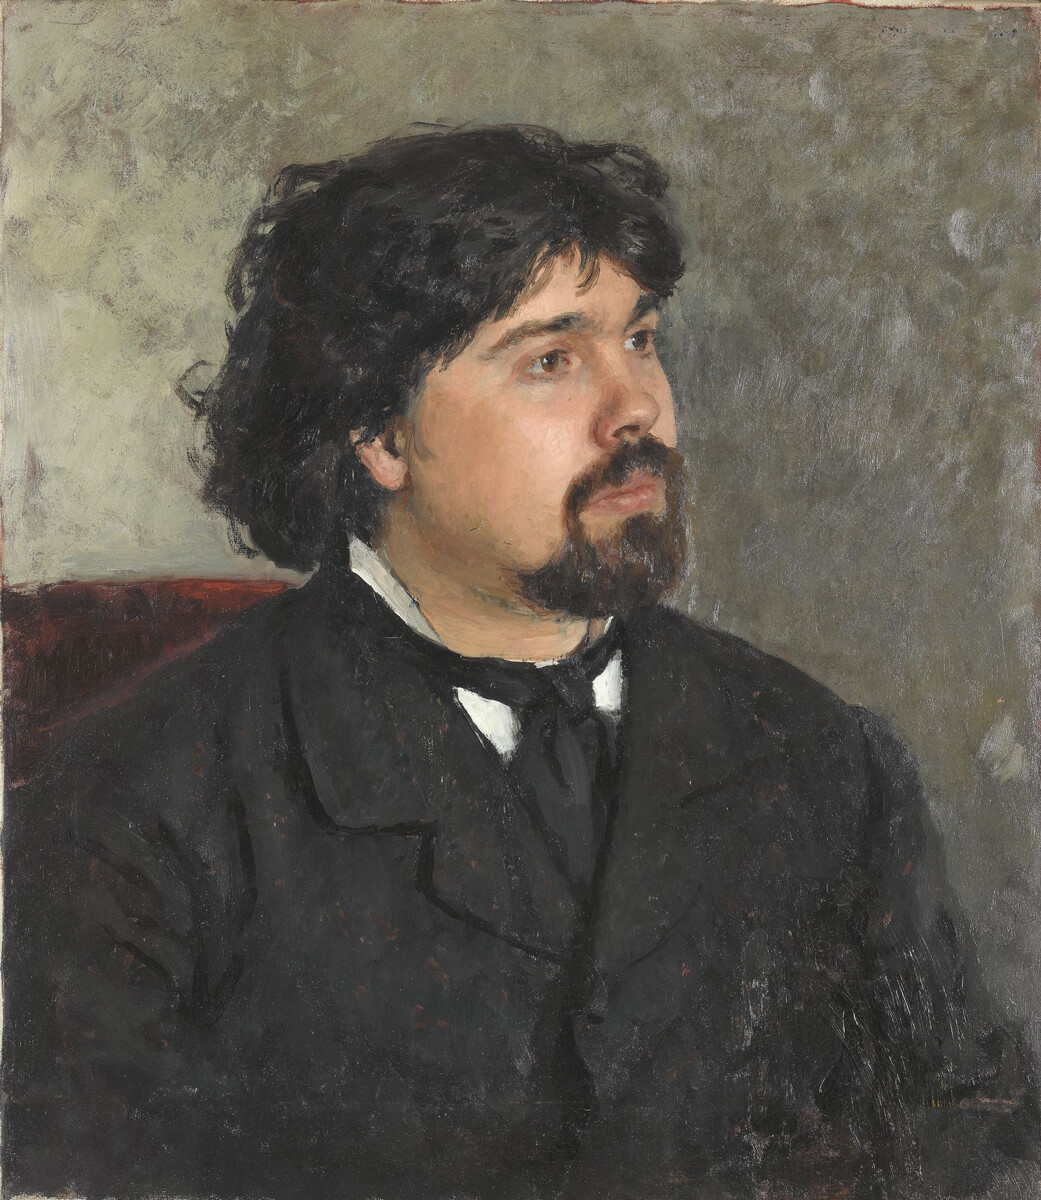 Portrait of Surikov by Ilya Repin.